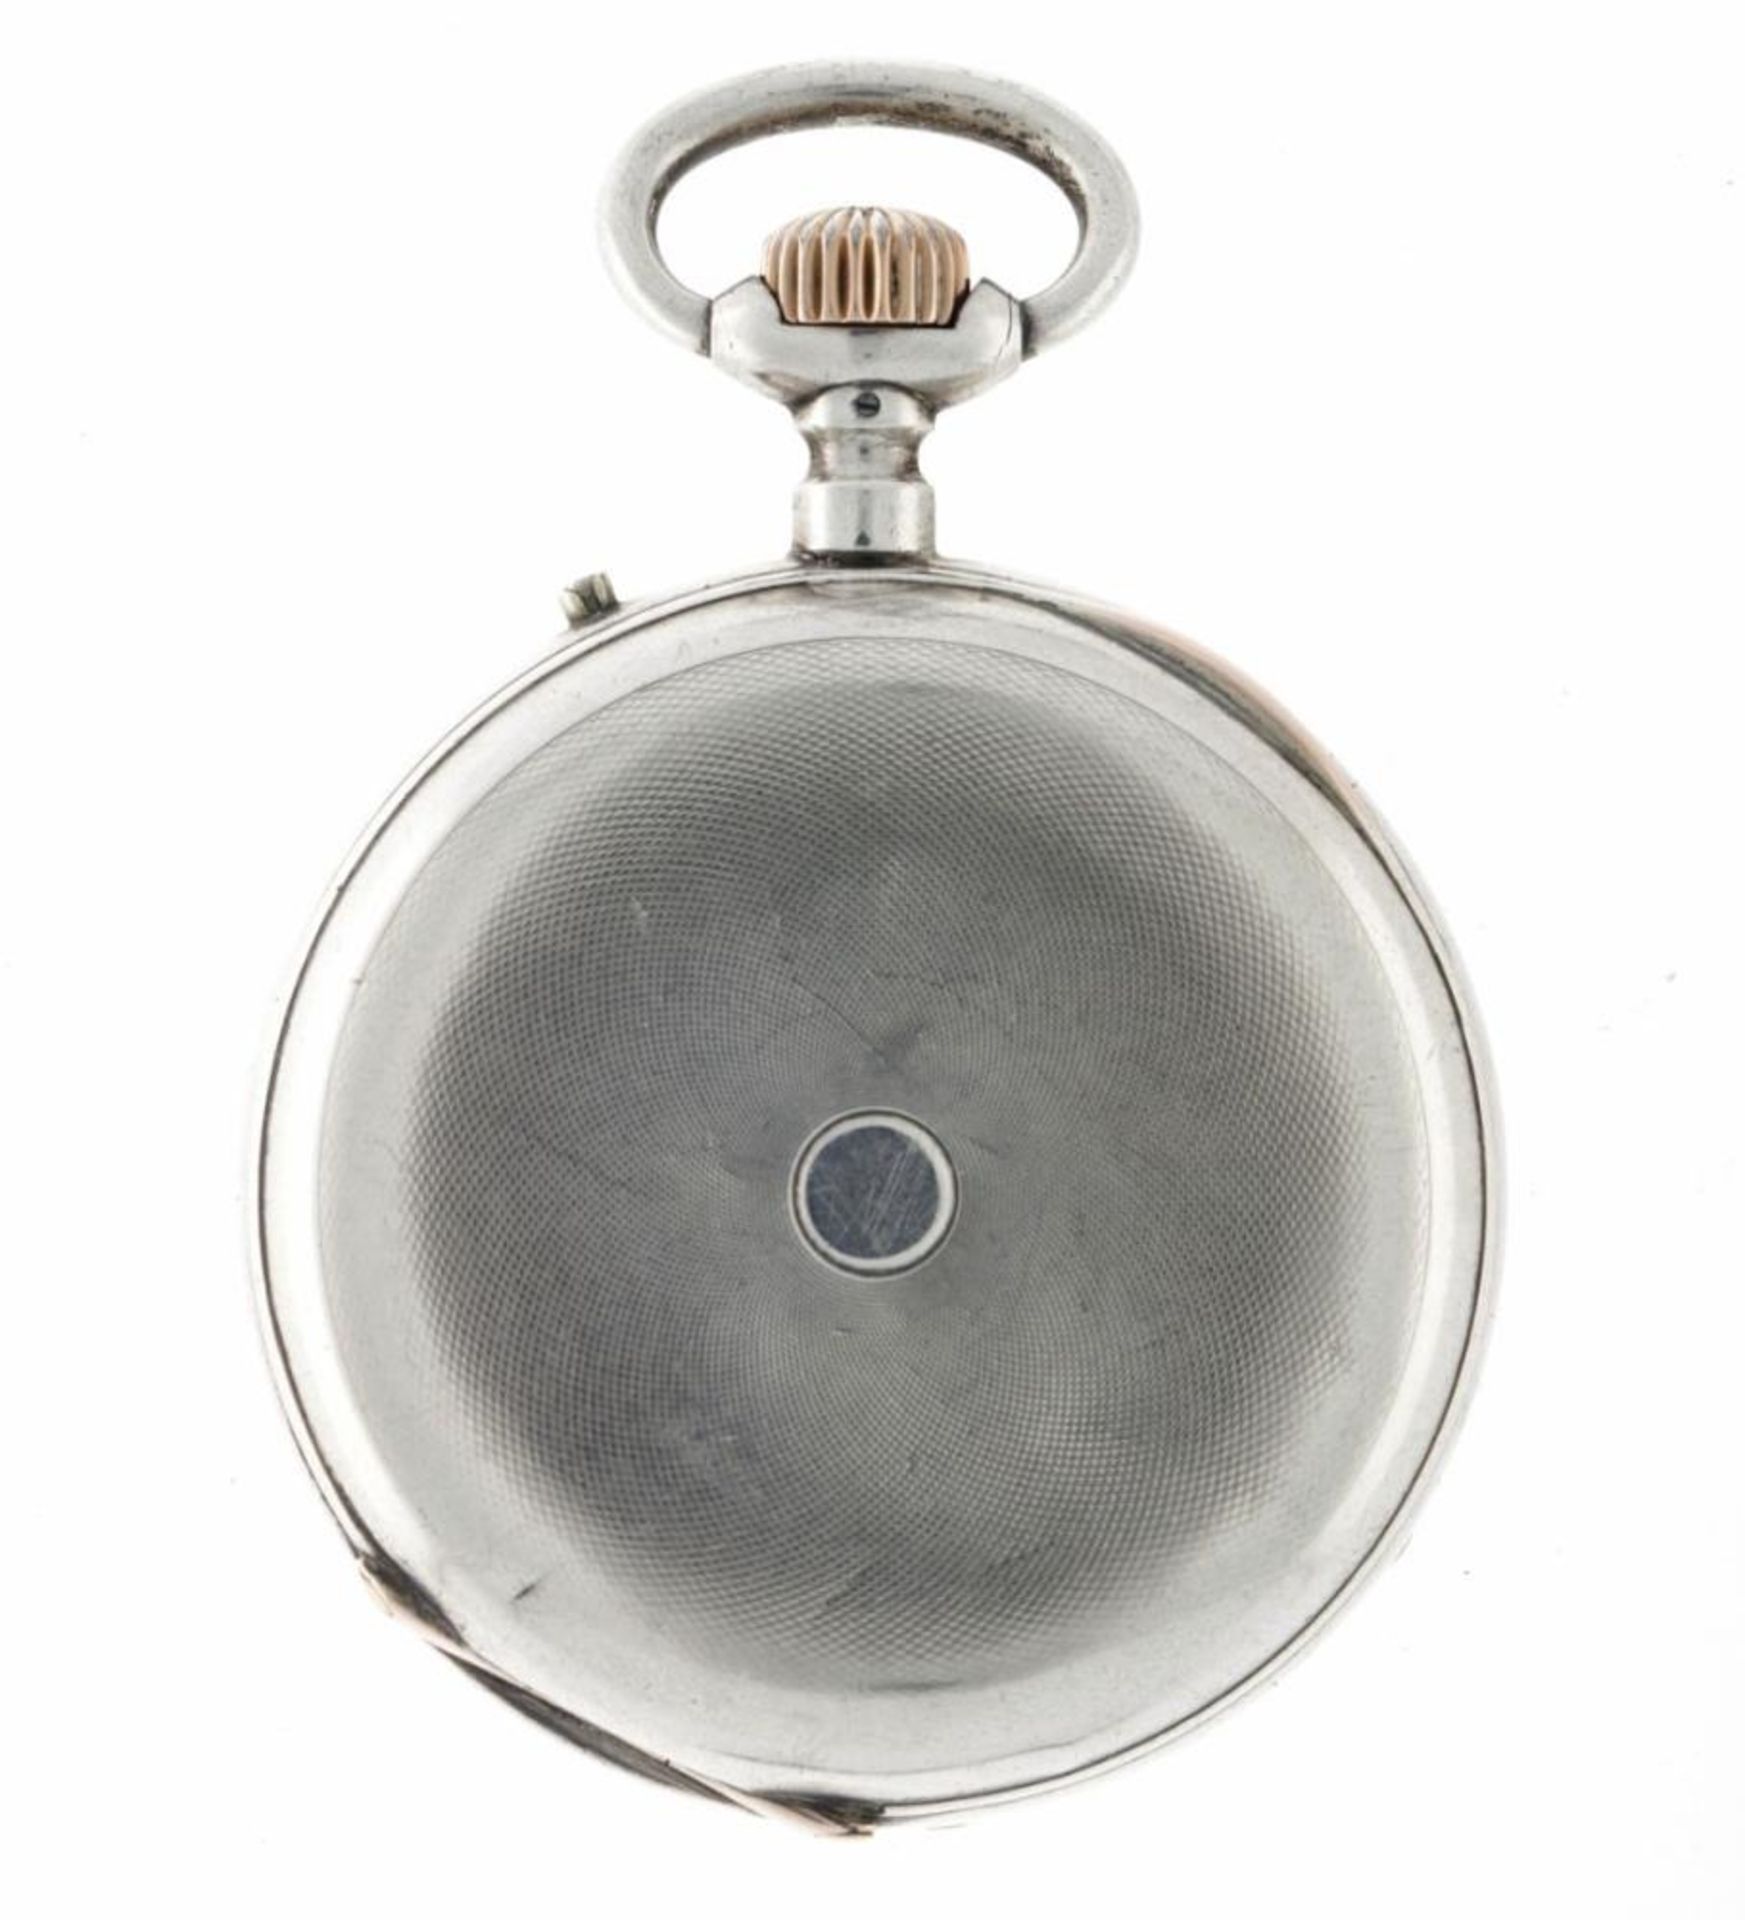 IWC Cylinder Escapement - Men's pocket watch - apprx. 1850. - Bild 2 aus 6